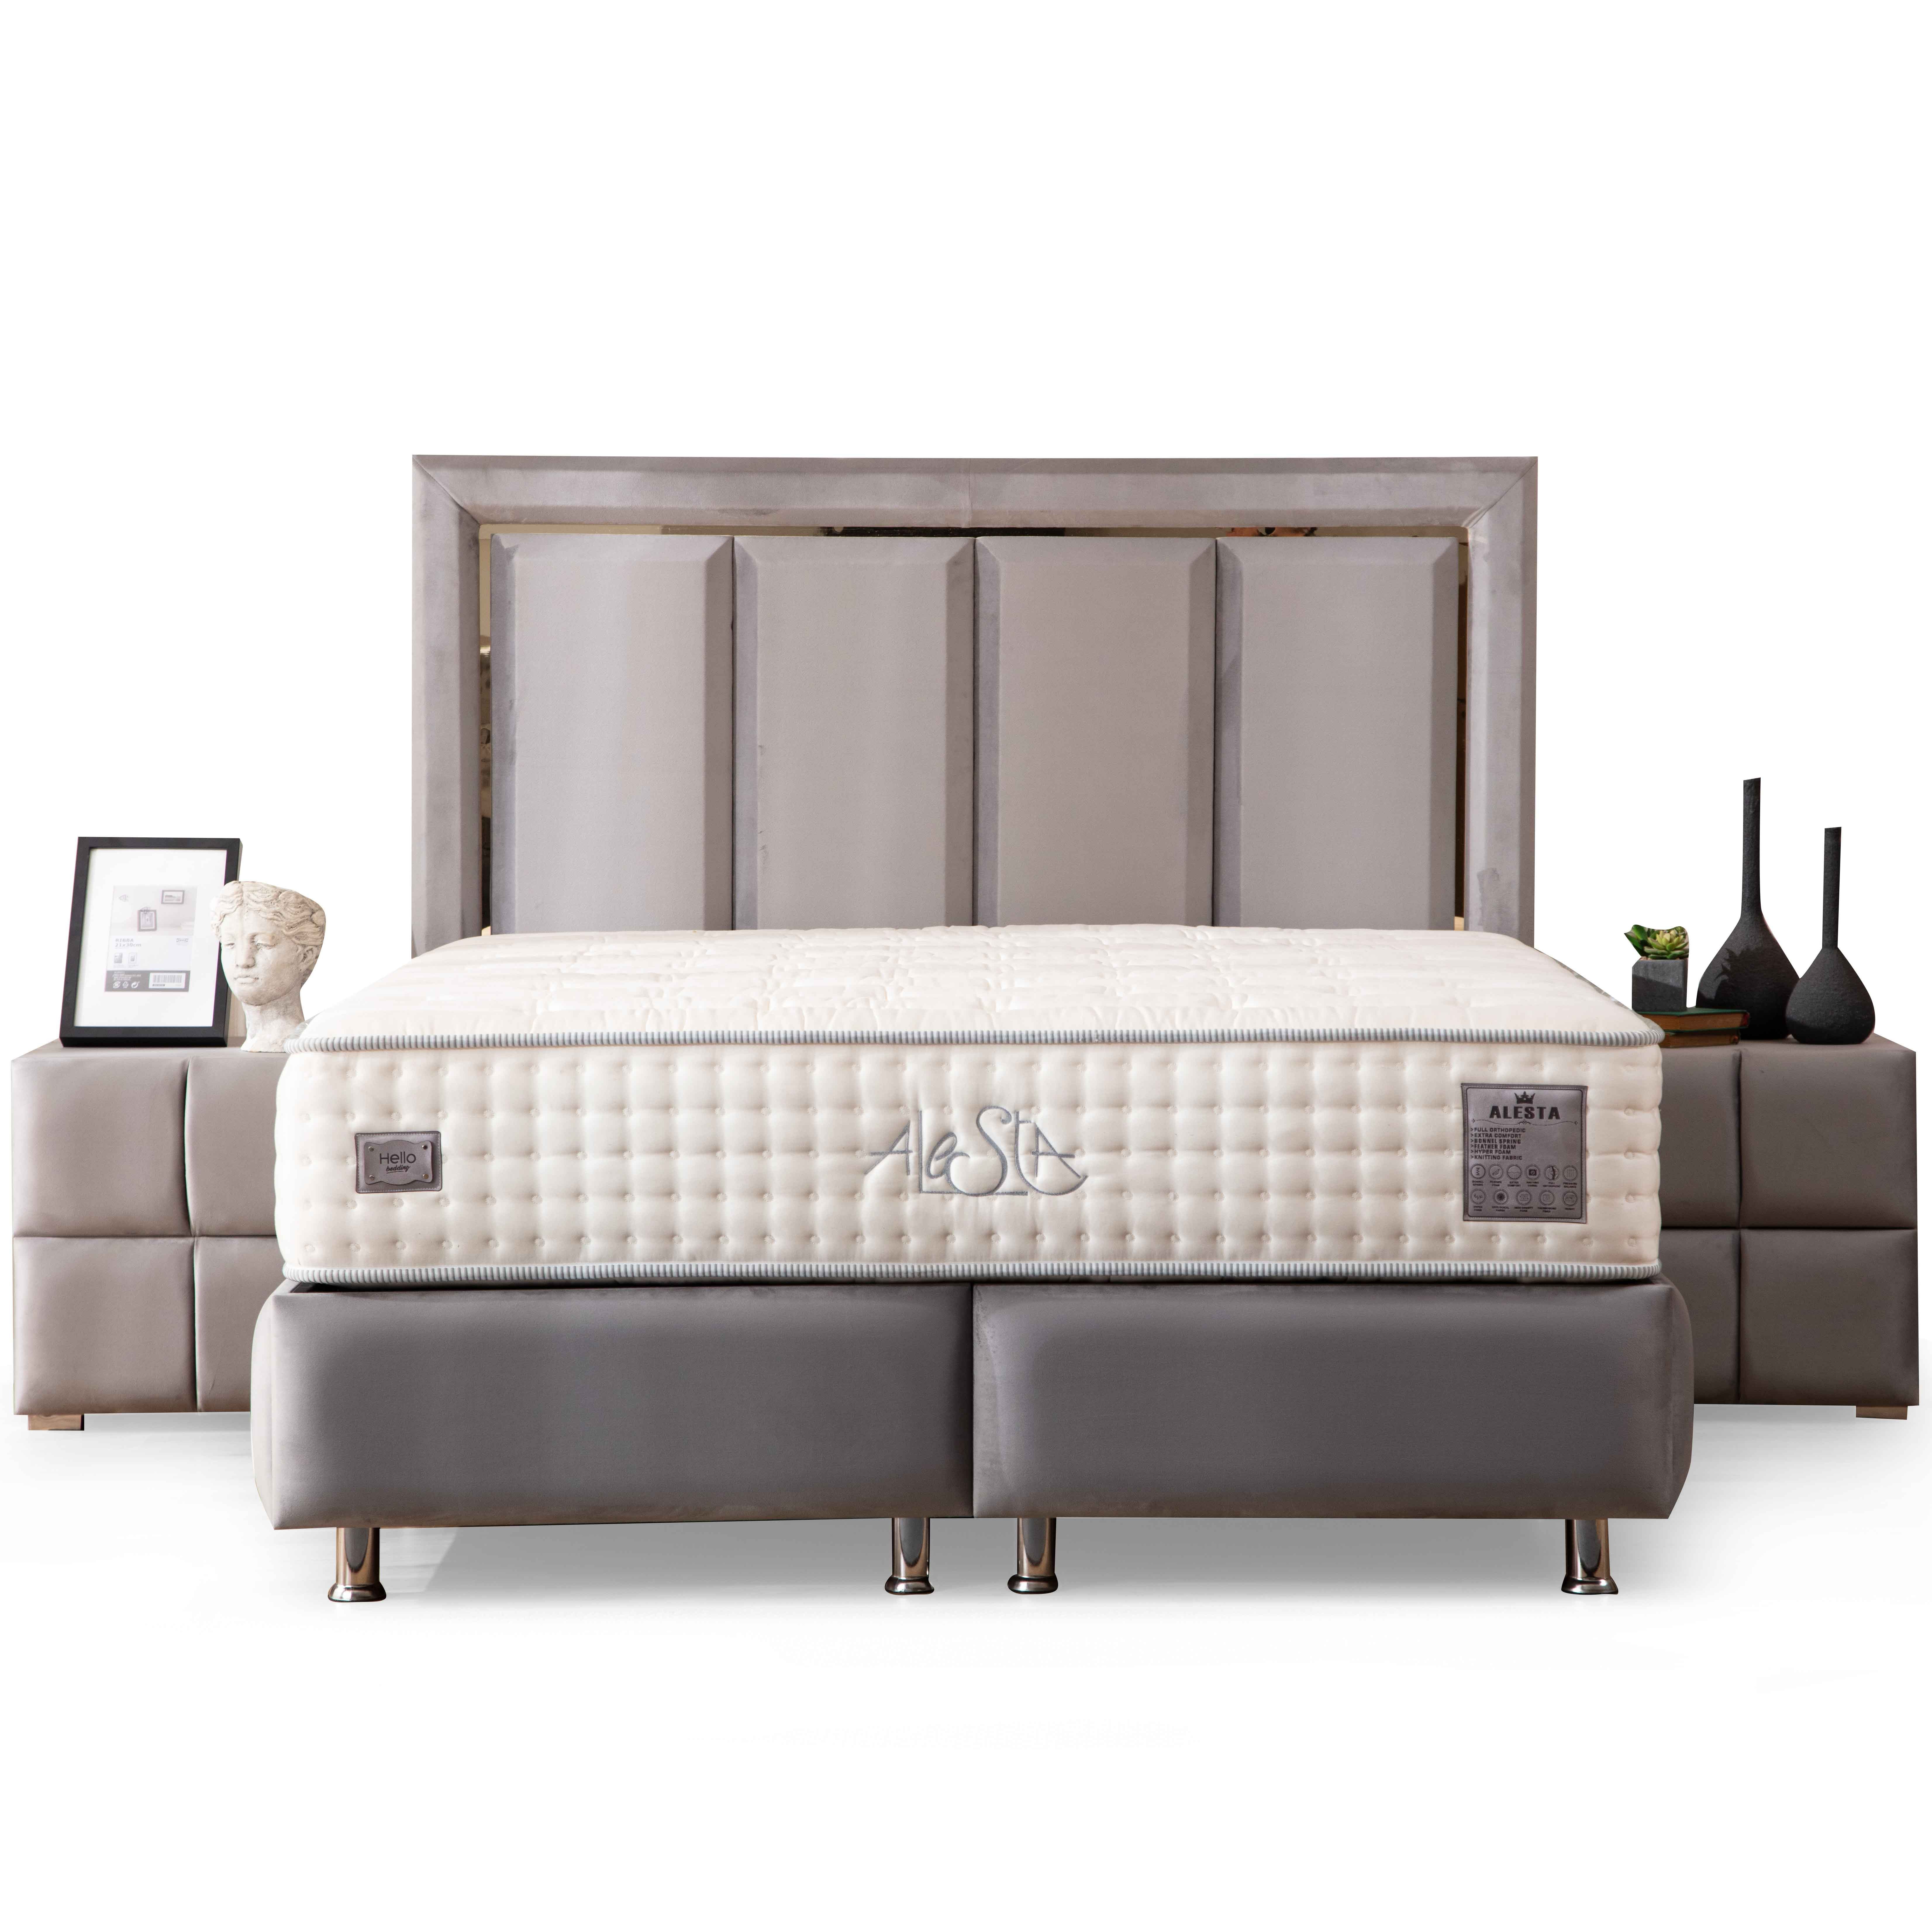 Bergama Bed With Storage 140x190 cm